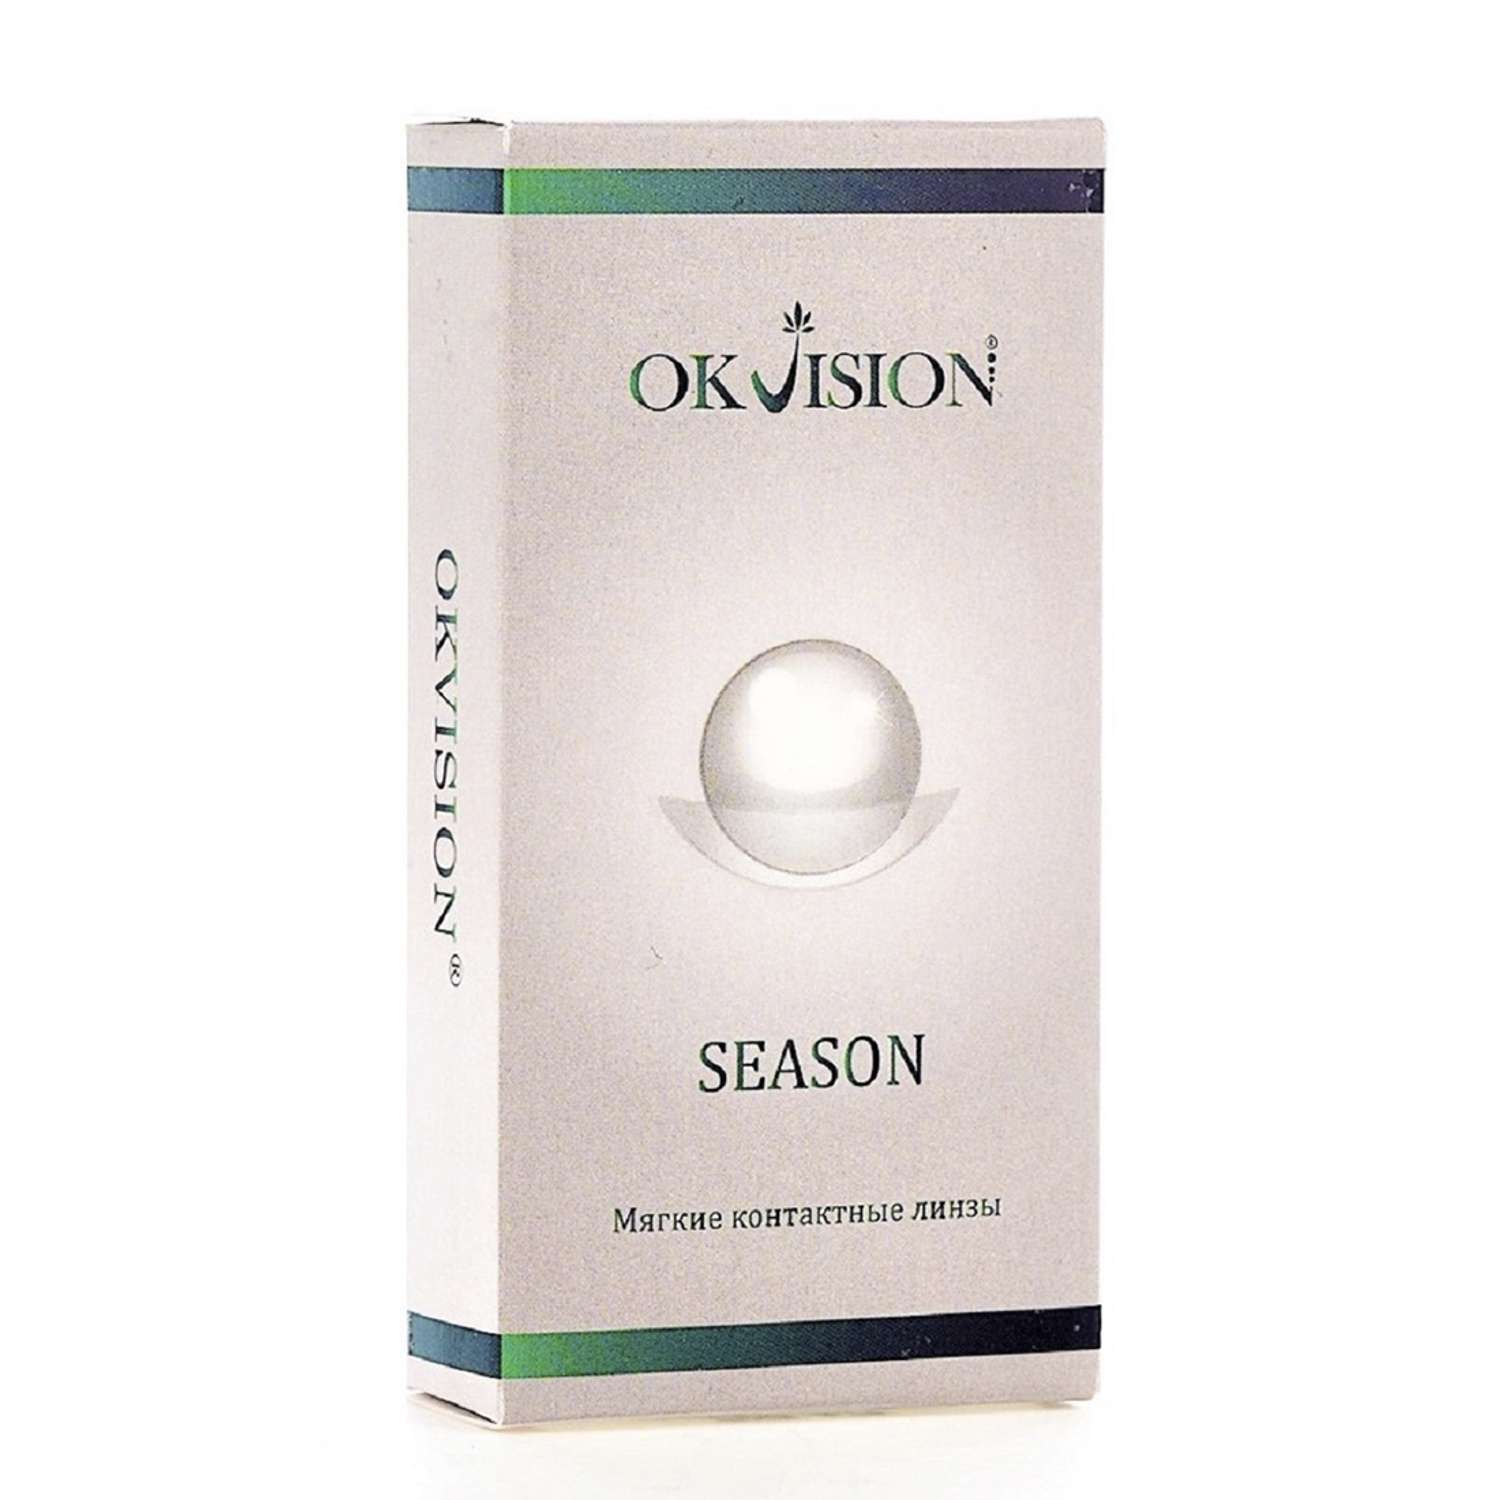 Контактные линзы OKVision Season 2 шт R 8.6 -3.50 - фото 1